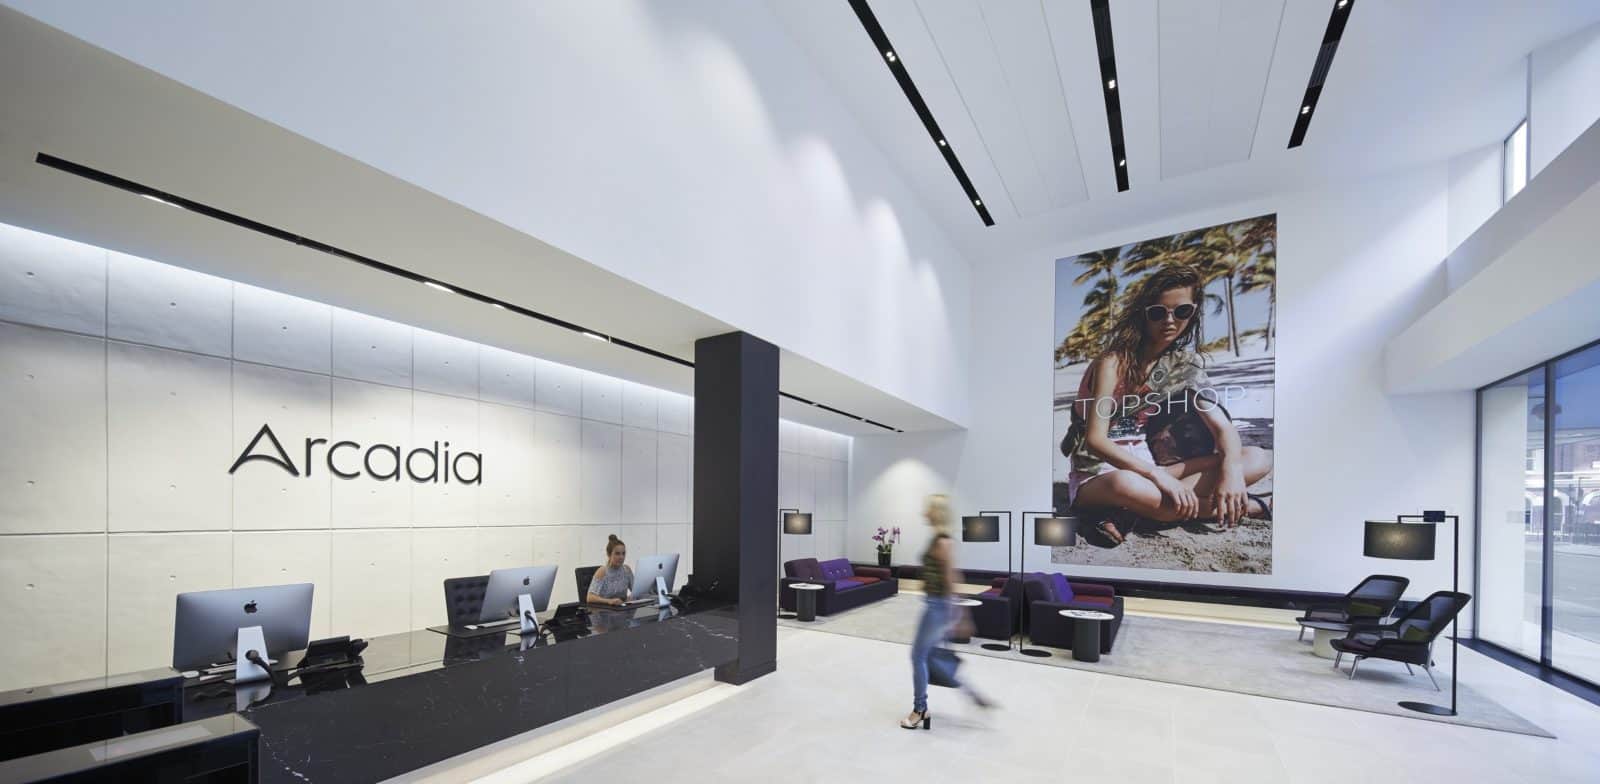 Arcadia’s brand portfolio worth £800 Million (?) up for grabs